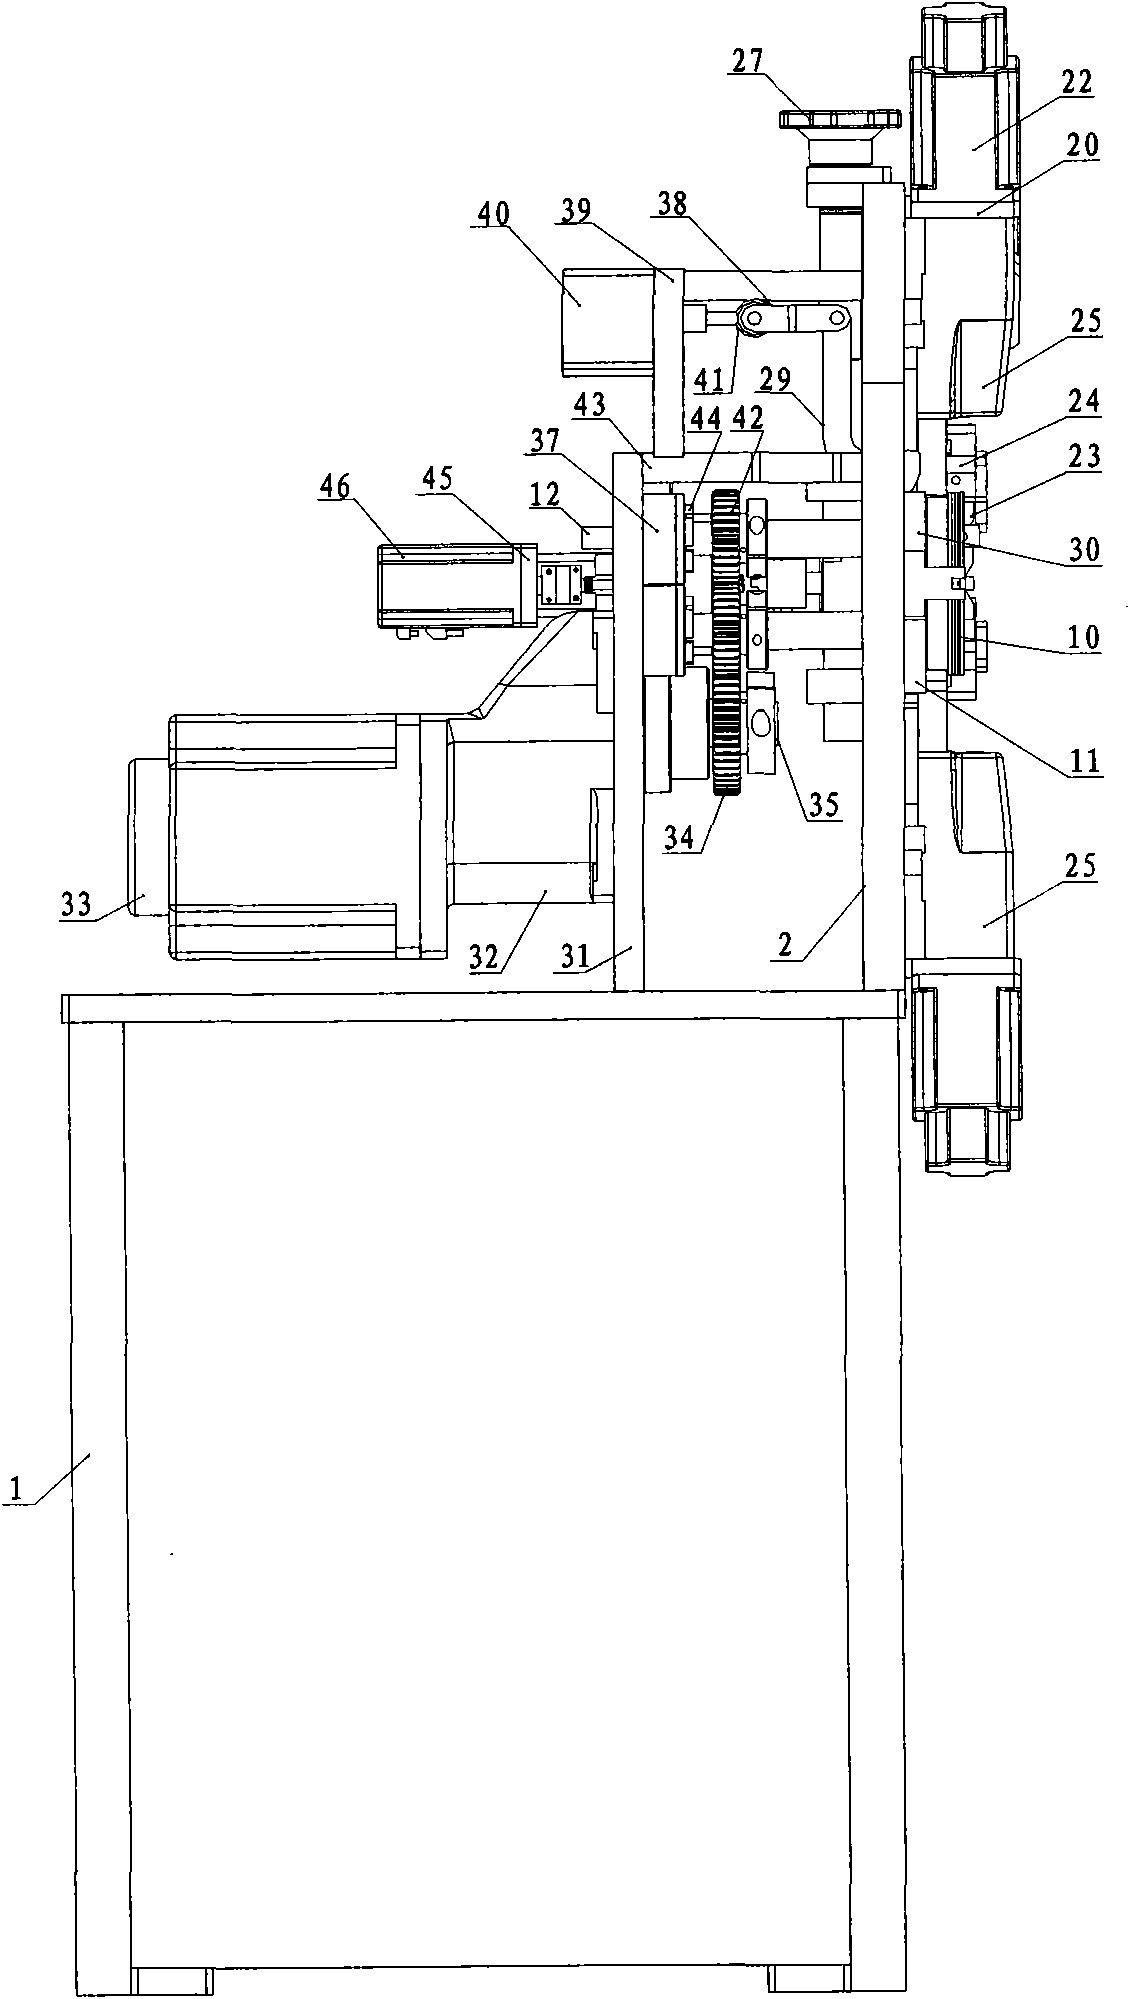 Intelligent computerized numerical control (CNC) spring machine